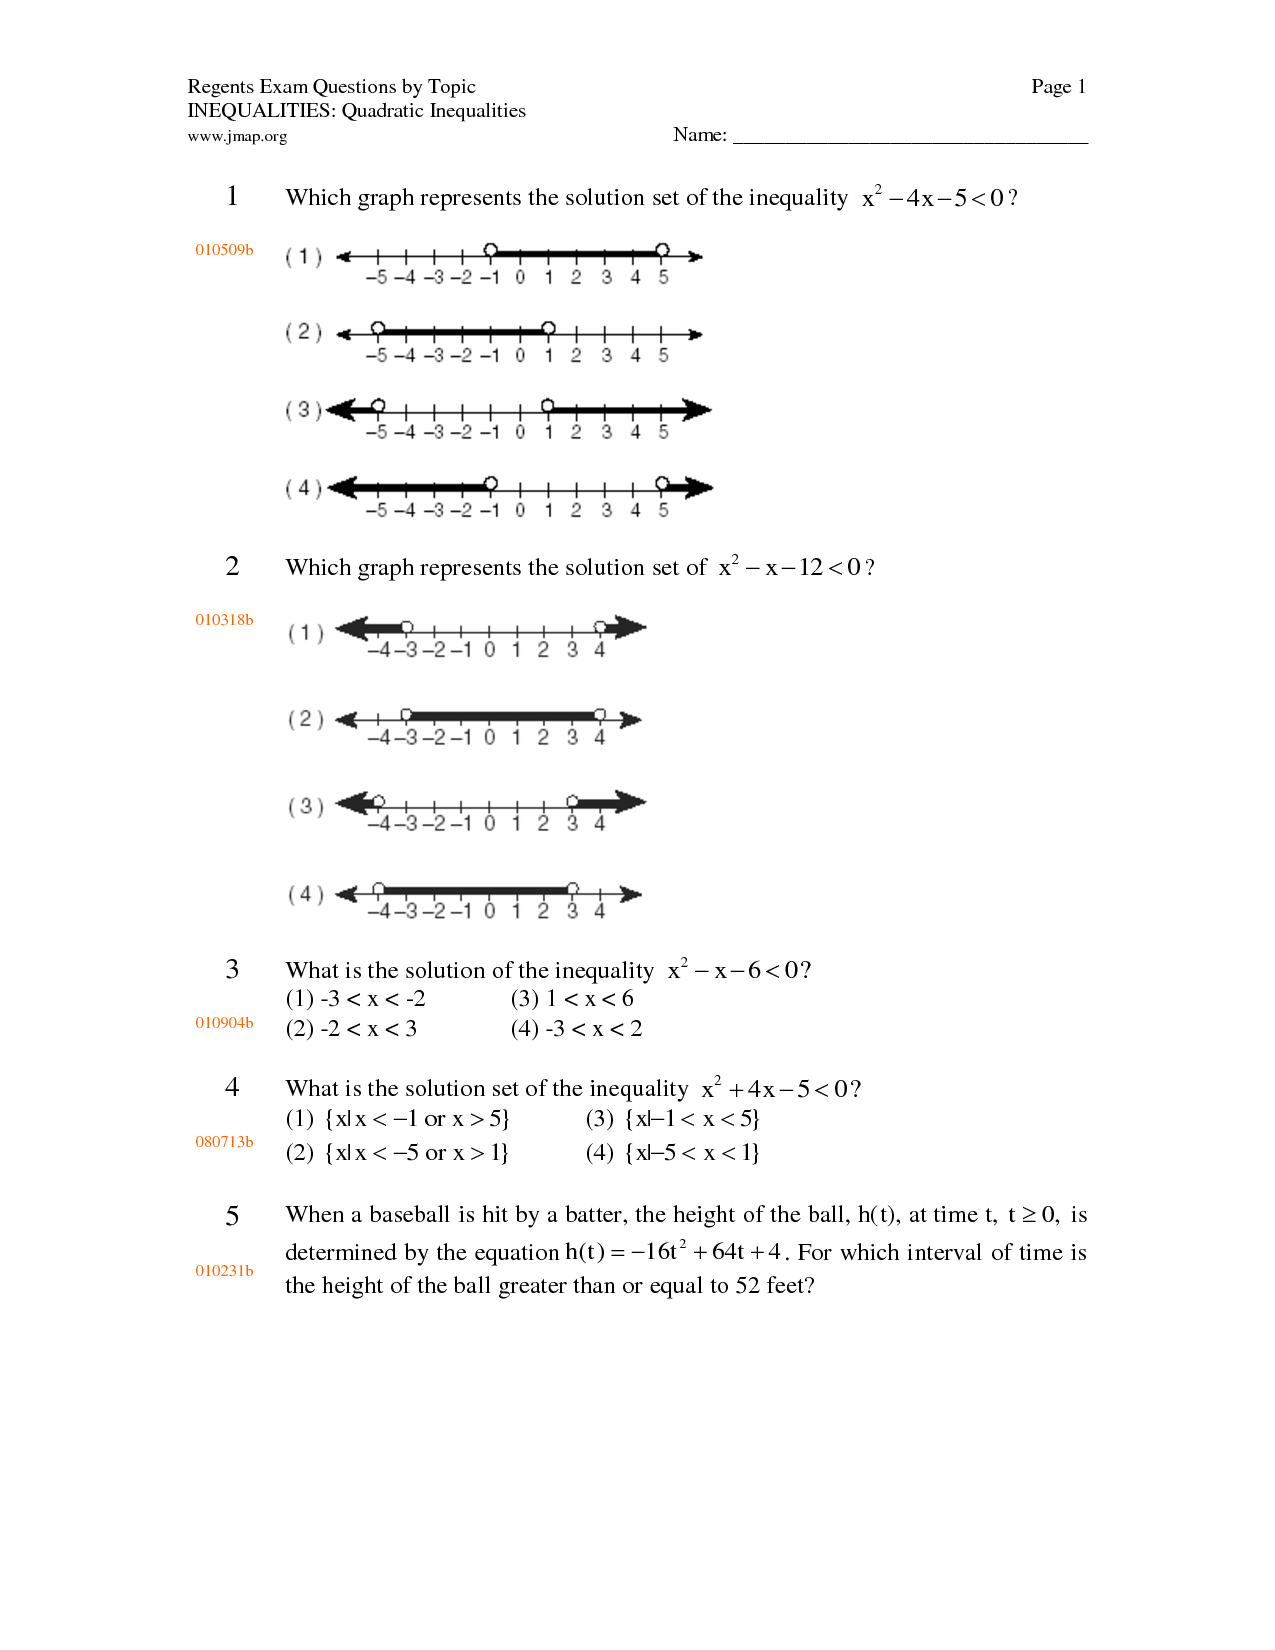 Graphing Quadratic Inequalities Worksheets Image